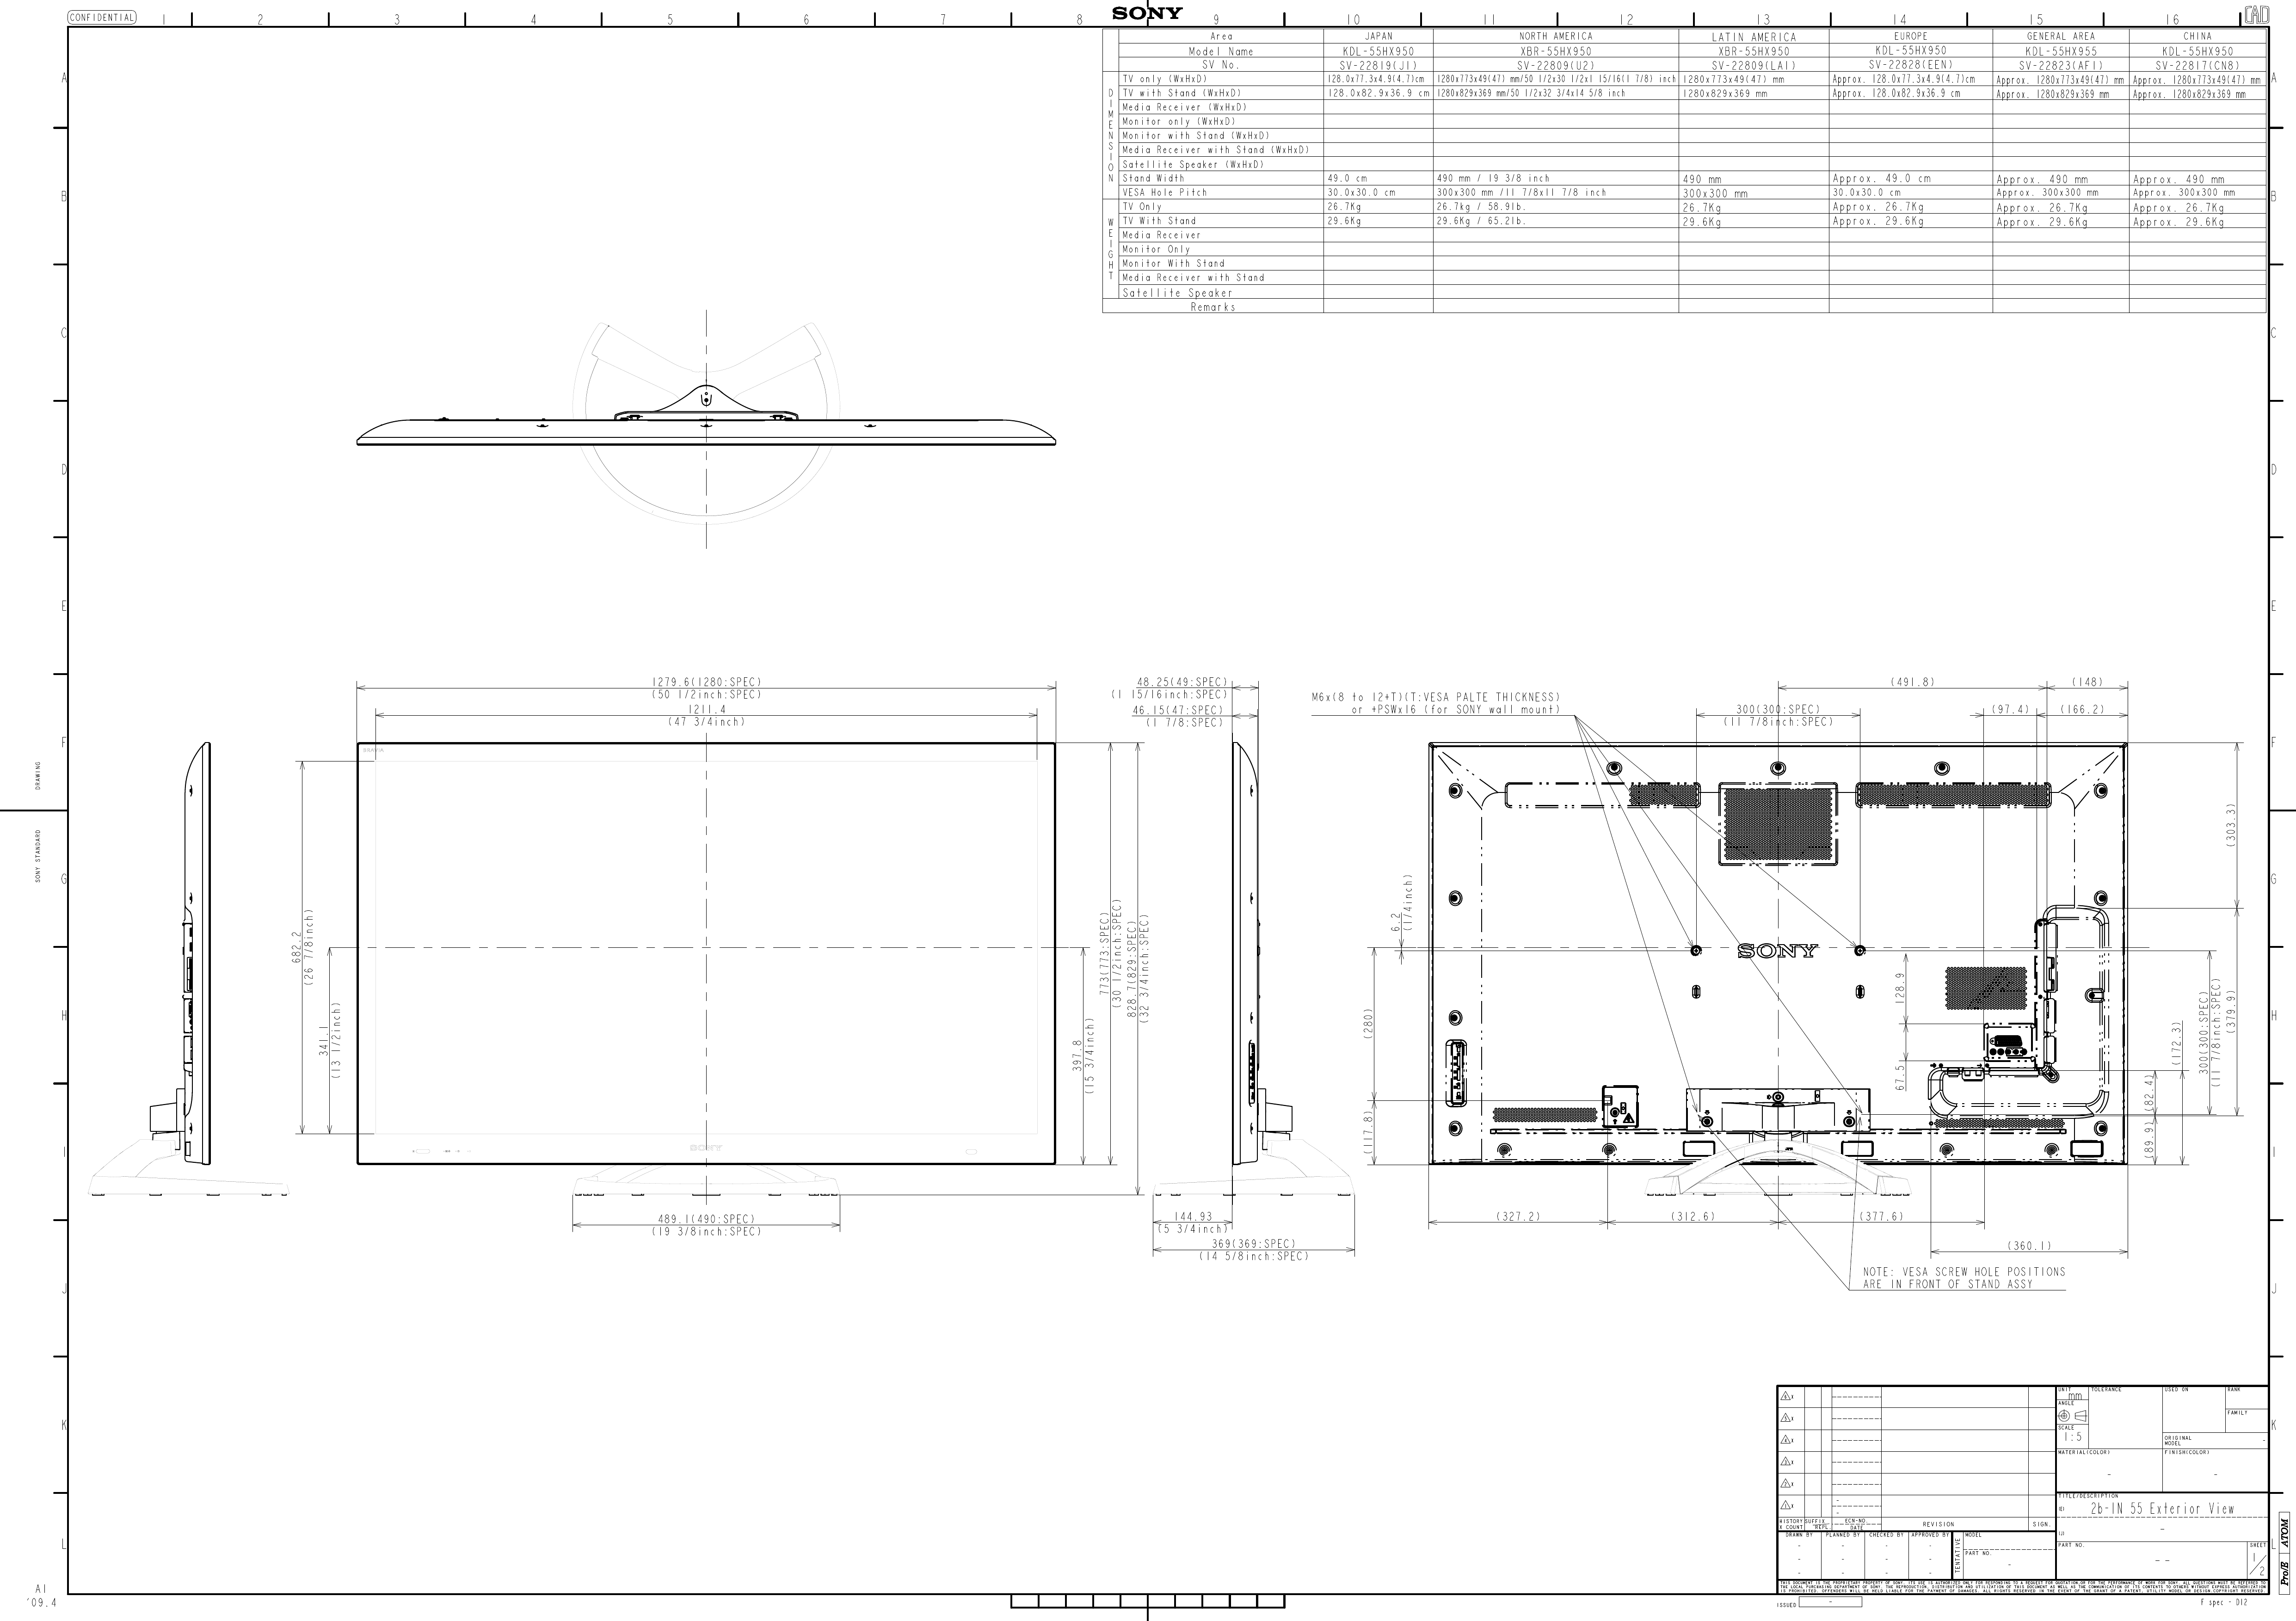 Page 1 of 2 - Sony XBR-55HX950 User Manual Dimensions Diagram XBR55HX950 Cutsheet